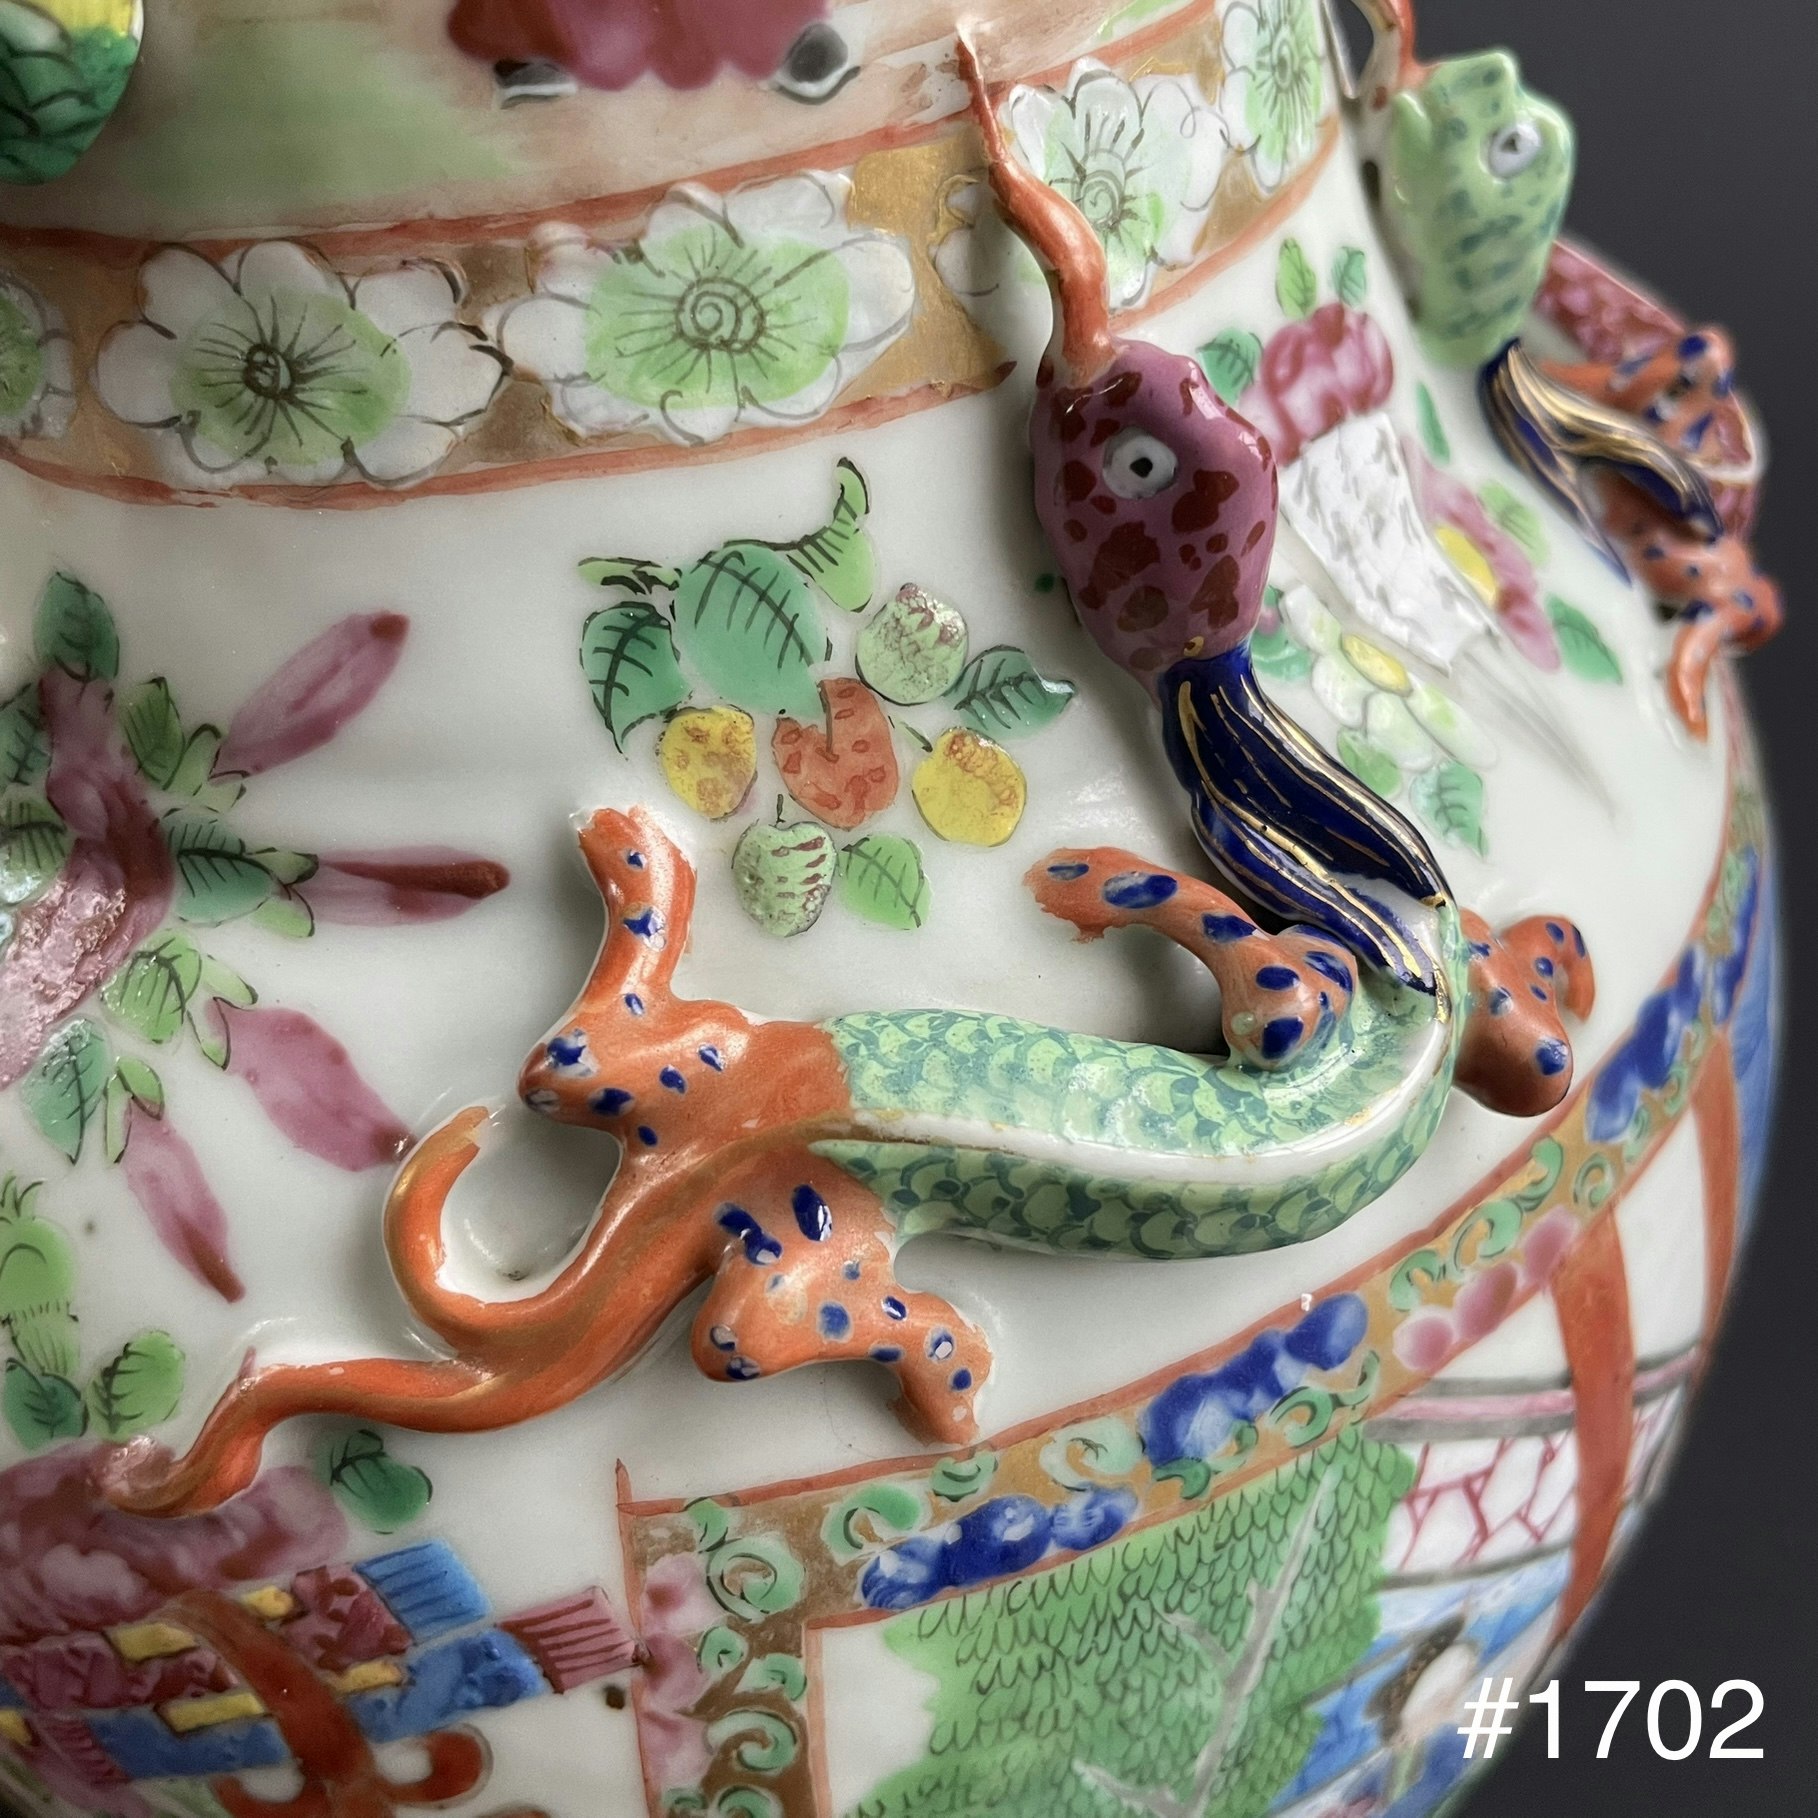 A Pair Of Chinese Antique Rose Mandarin Vases,  19th c #1701, 1702